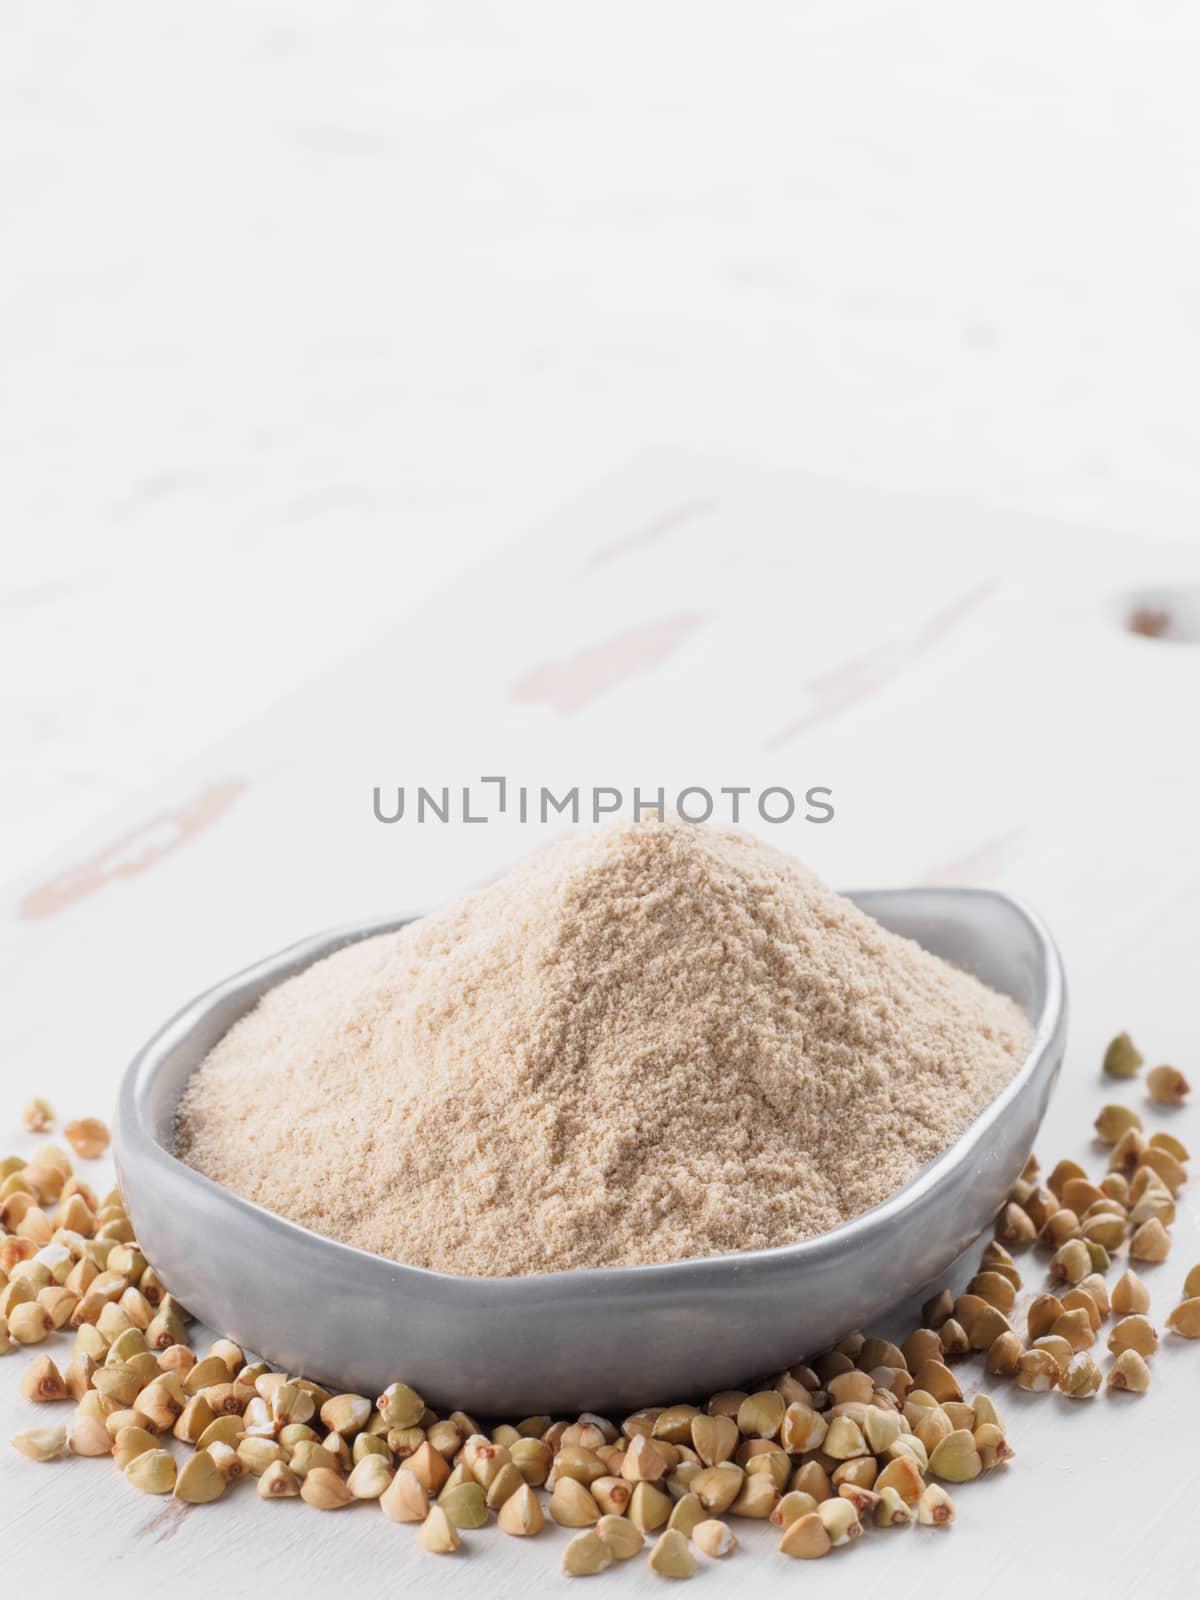 Buckwheat flour and buckwheat on white background Copy space.